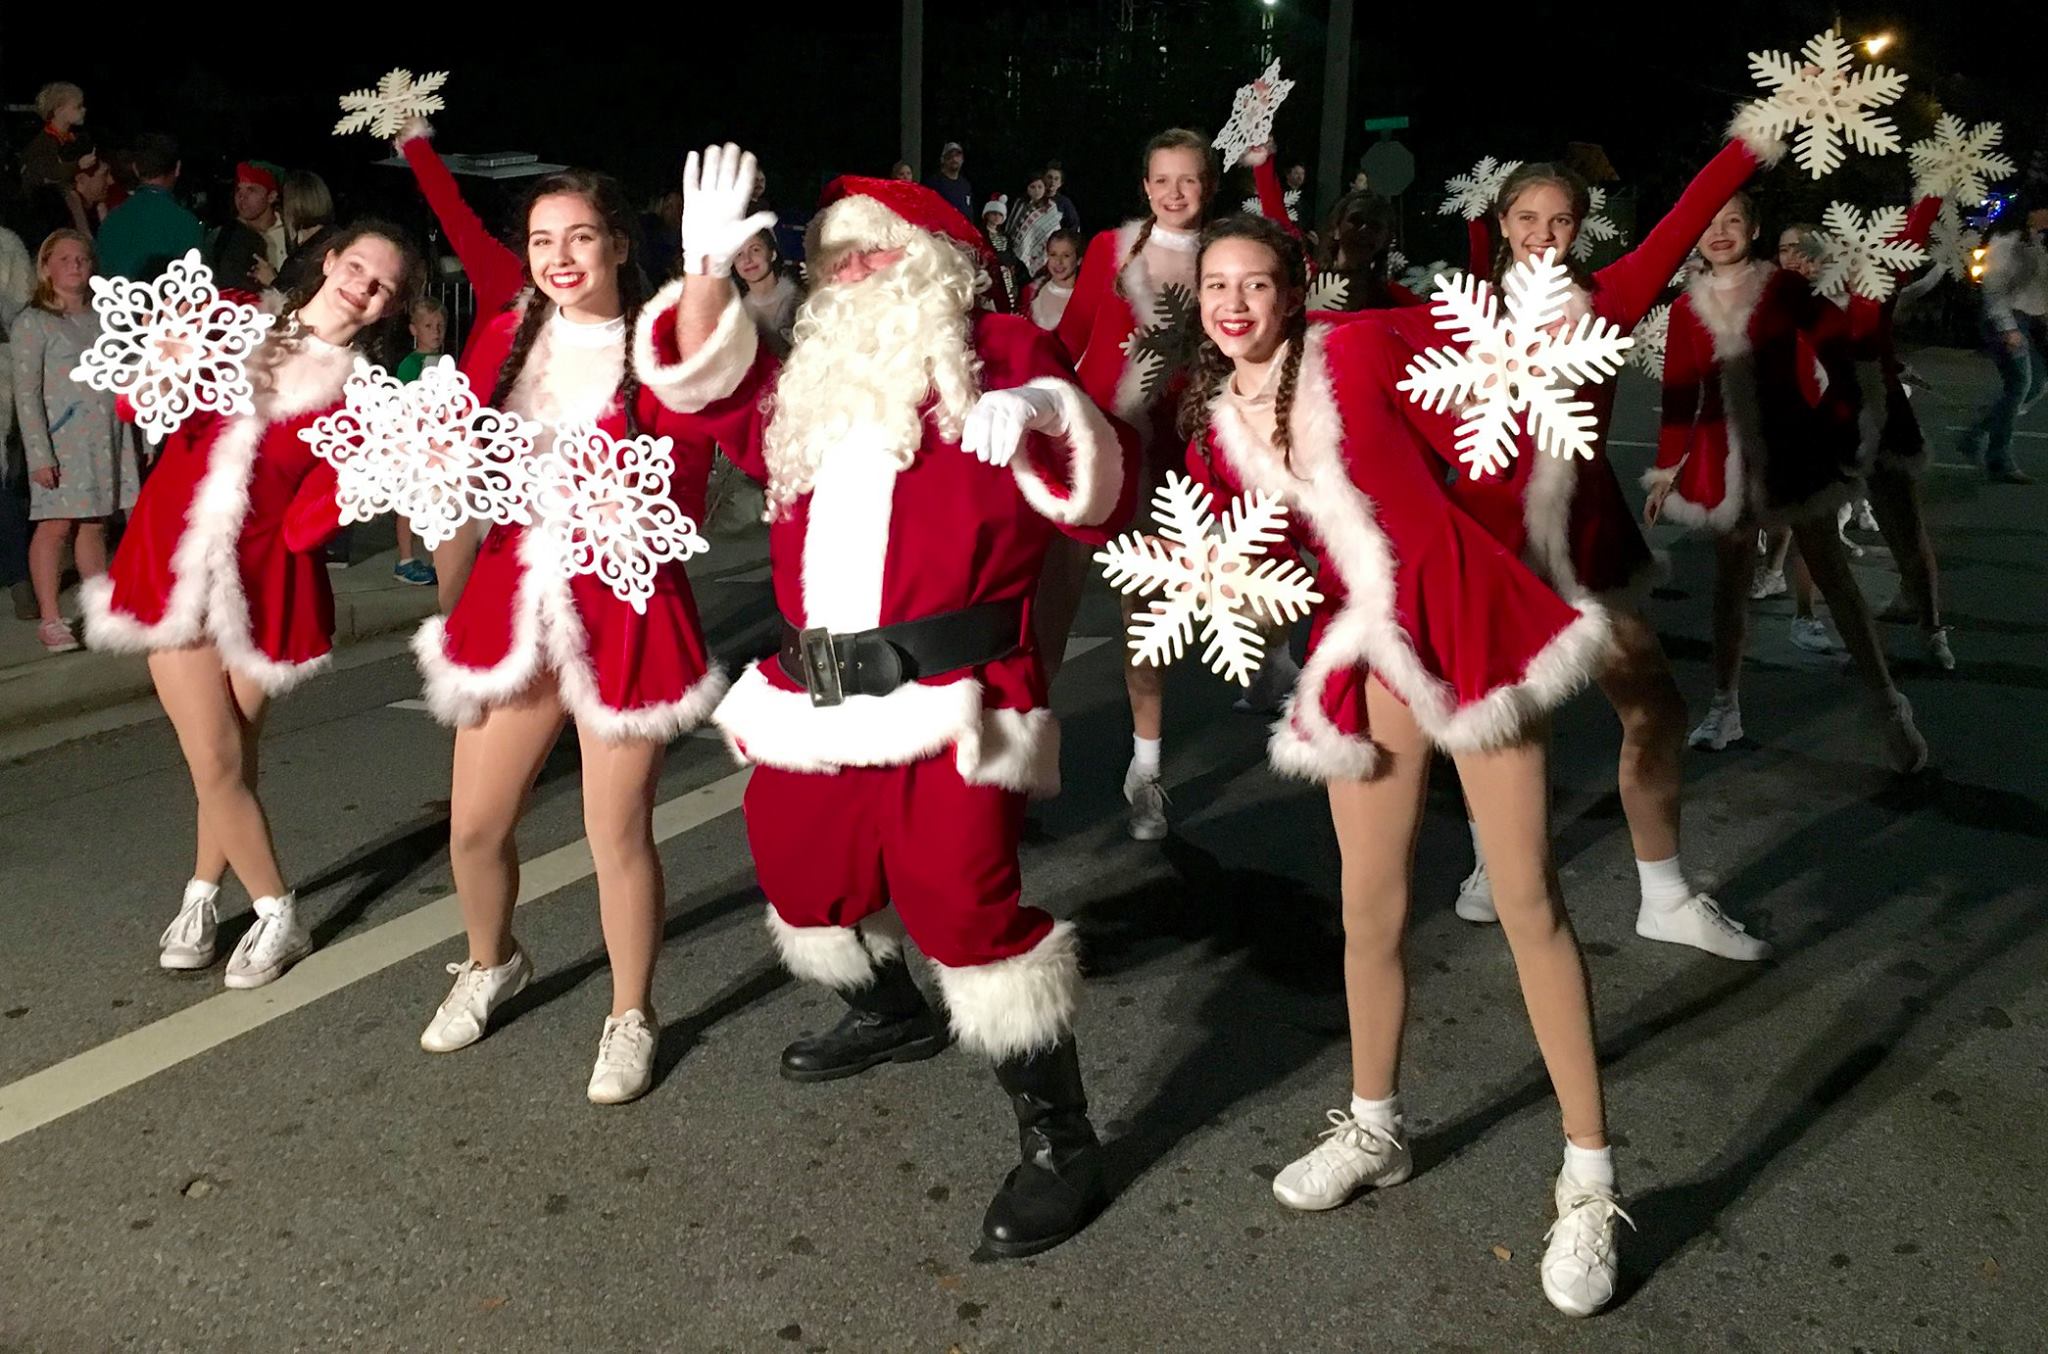 Fairhope Magical Christmas Parade Focus Empowers